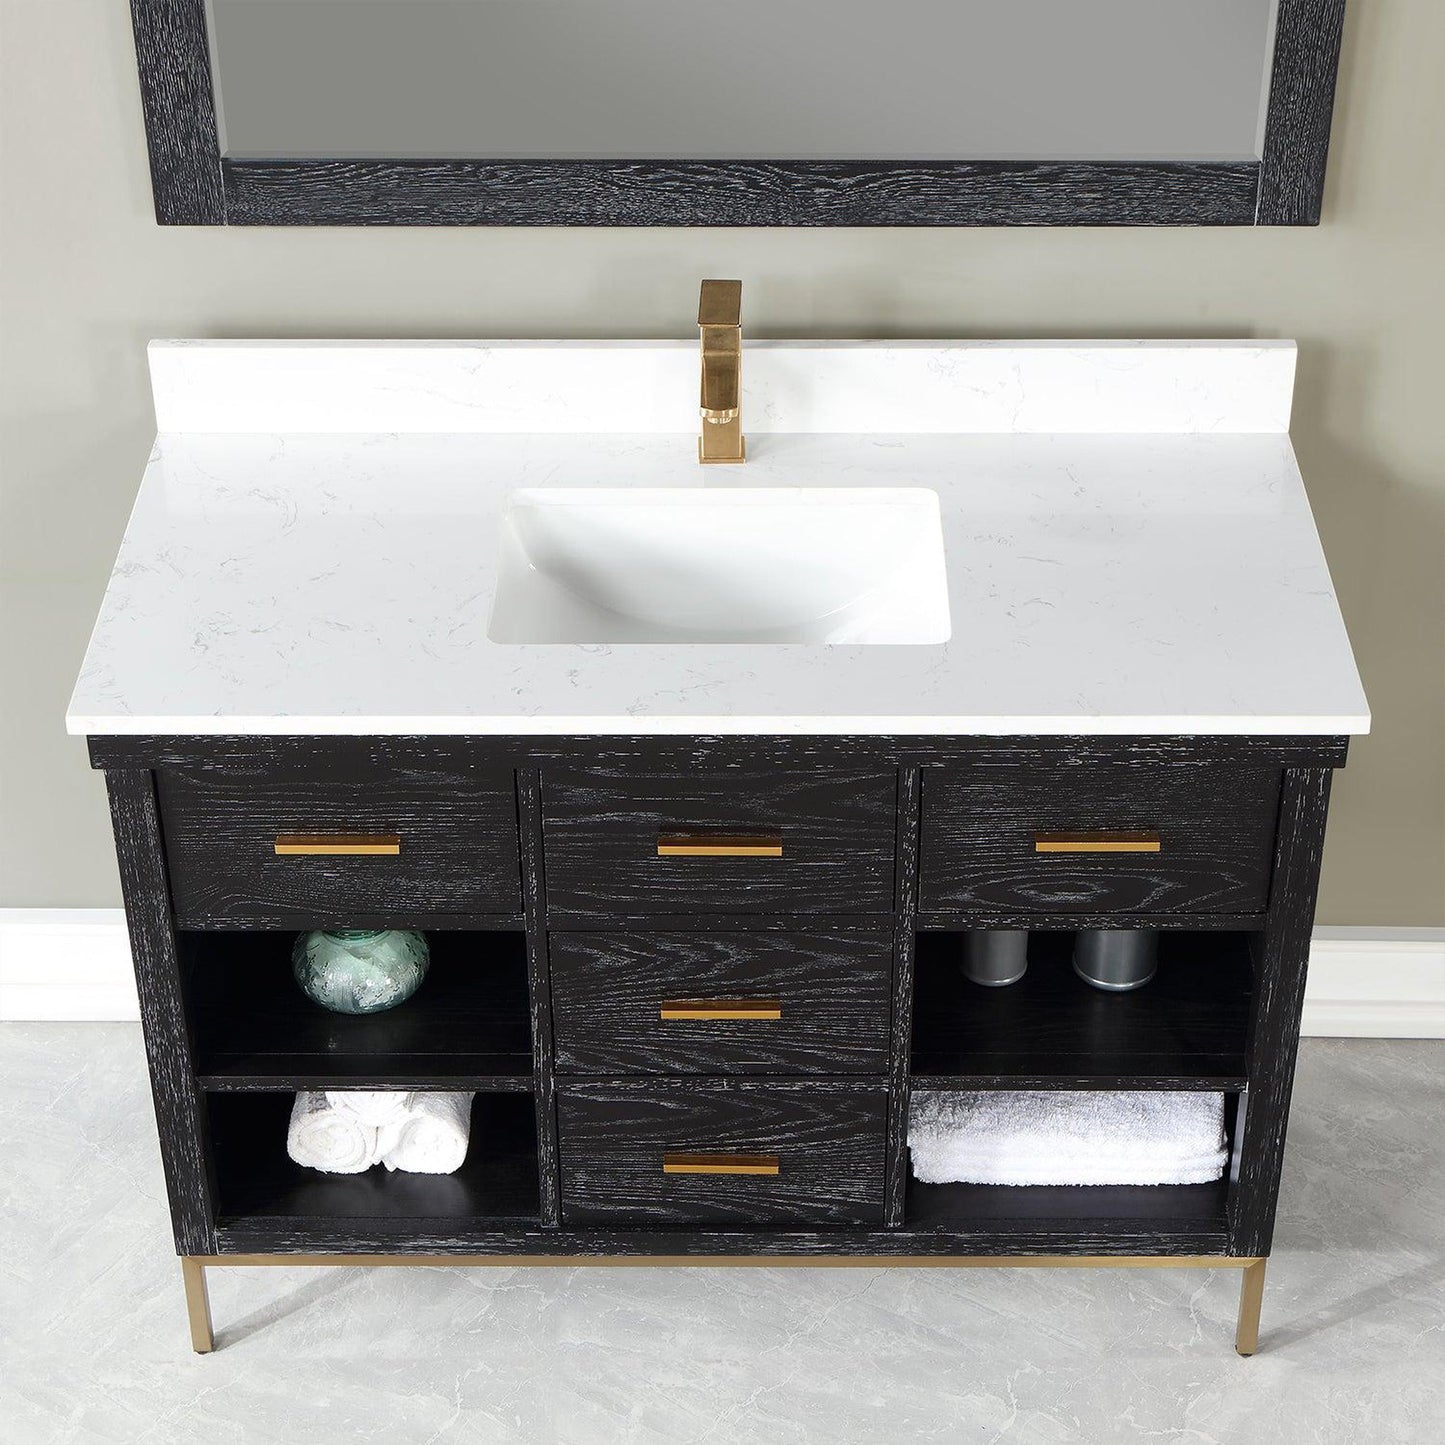 Altair Kesia 48" Black Oak Freestanding Single Bathroom Vanity Set With Mirror, Stylish Aosta White Composite Stone Top, Rectangular Undermount Ceramic Sink, Overflow, and Backsplash